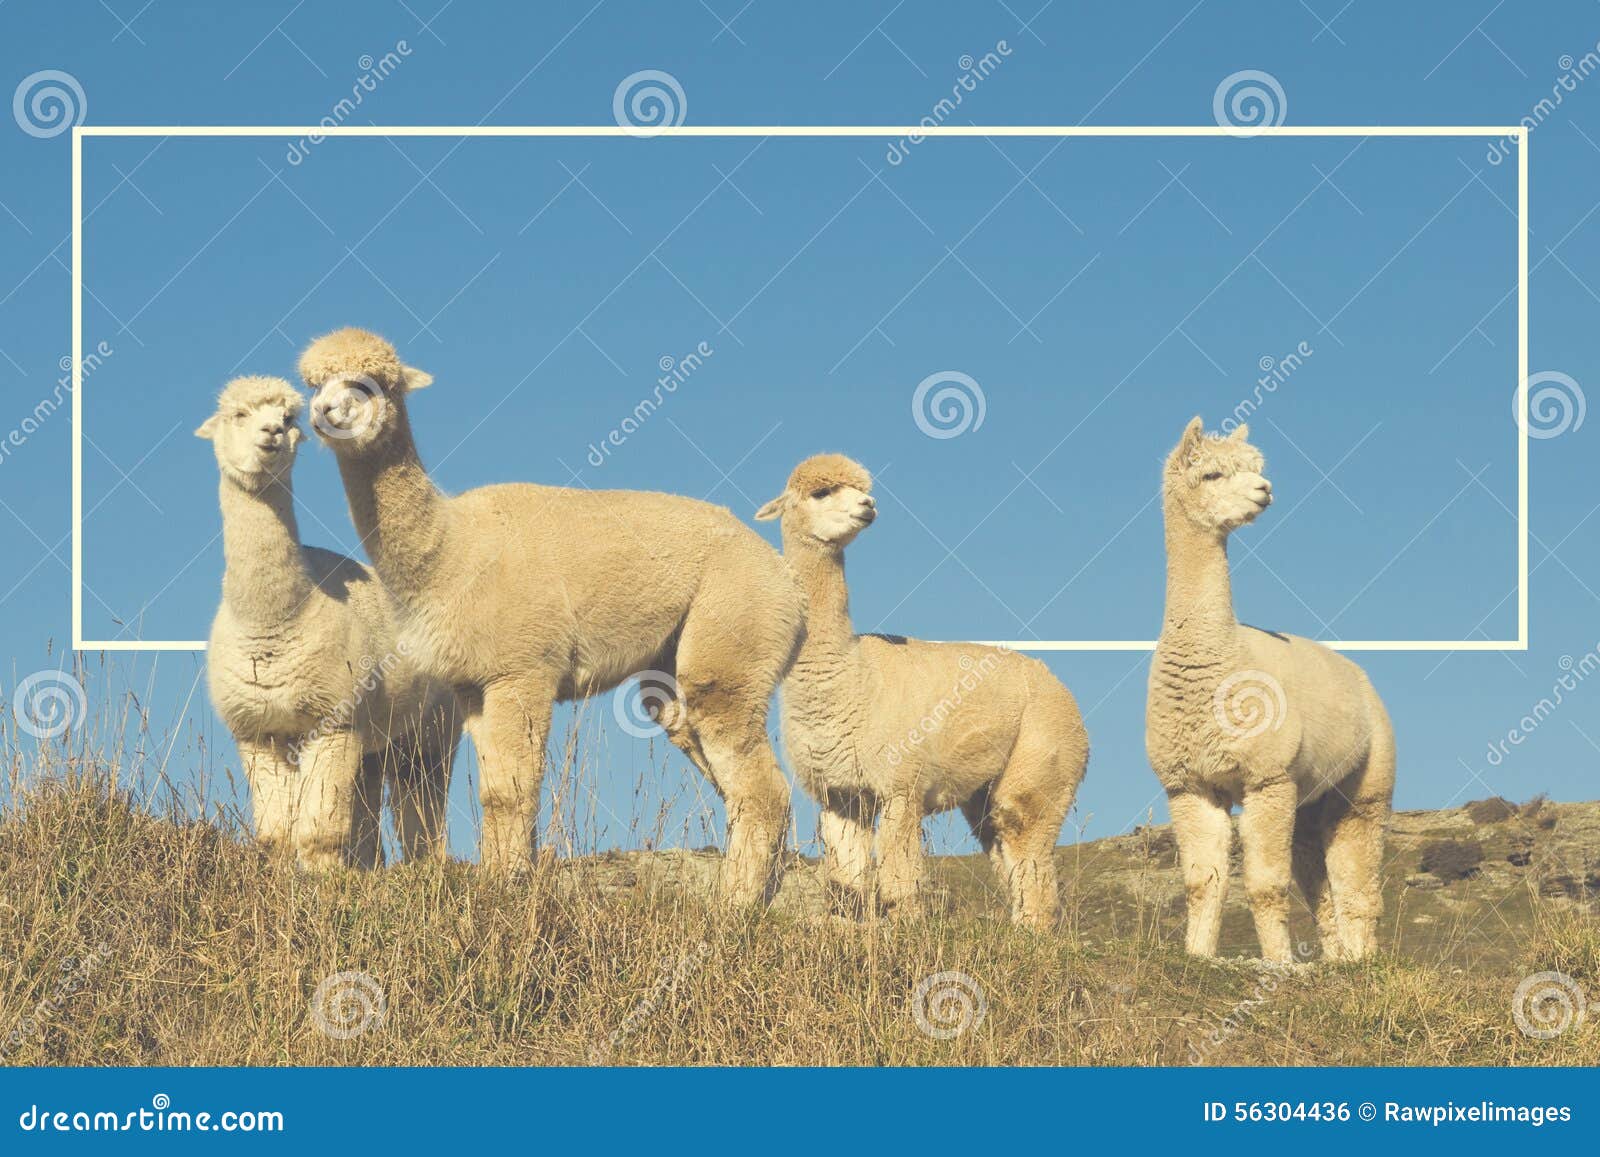 alpaca lama shaggy field mountain animals concept